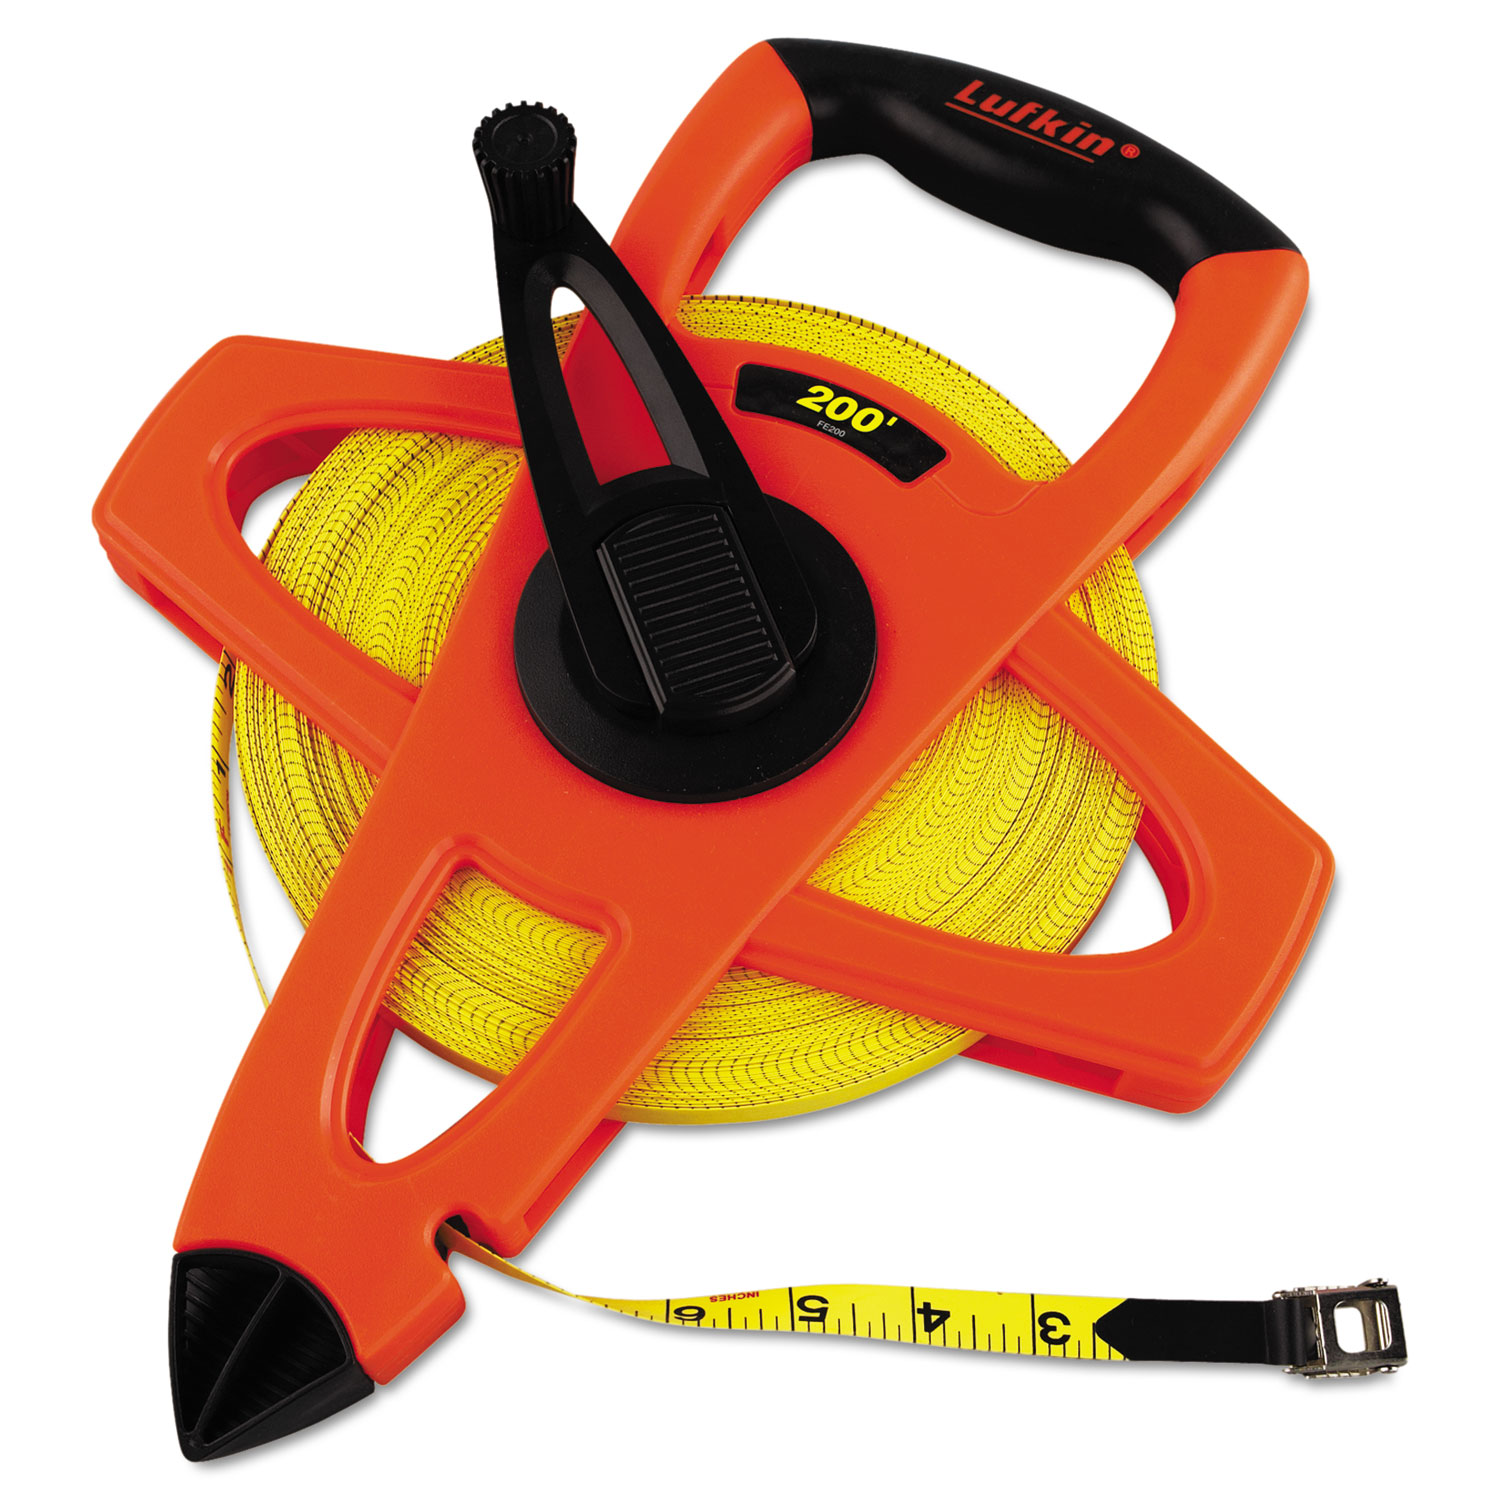 Engineer Hi-Viz Fiberglass Measuring Tape, 1/2x200ft, Yellow Blade, Orange Case